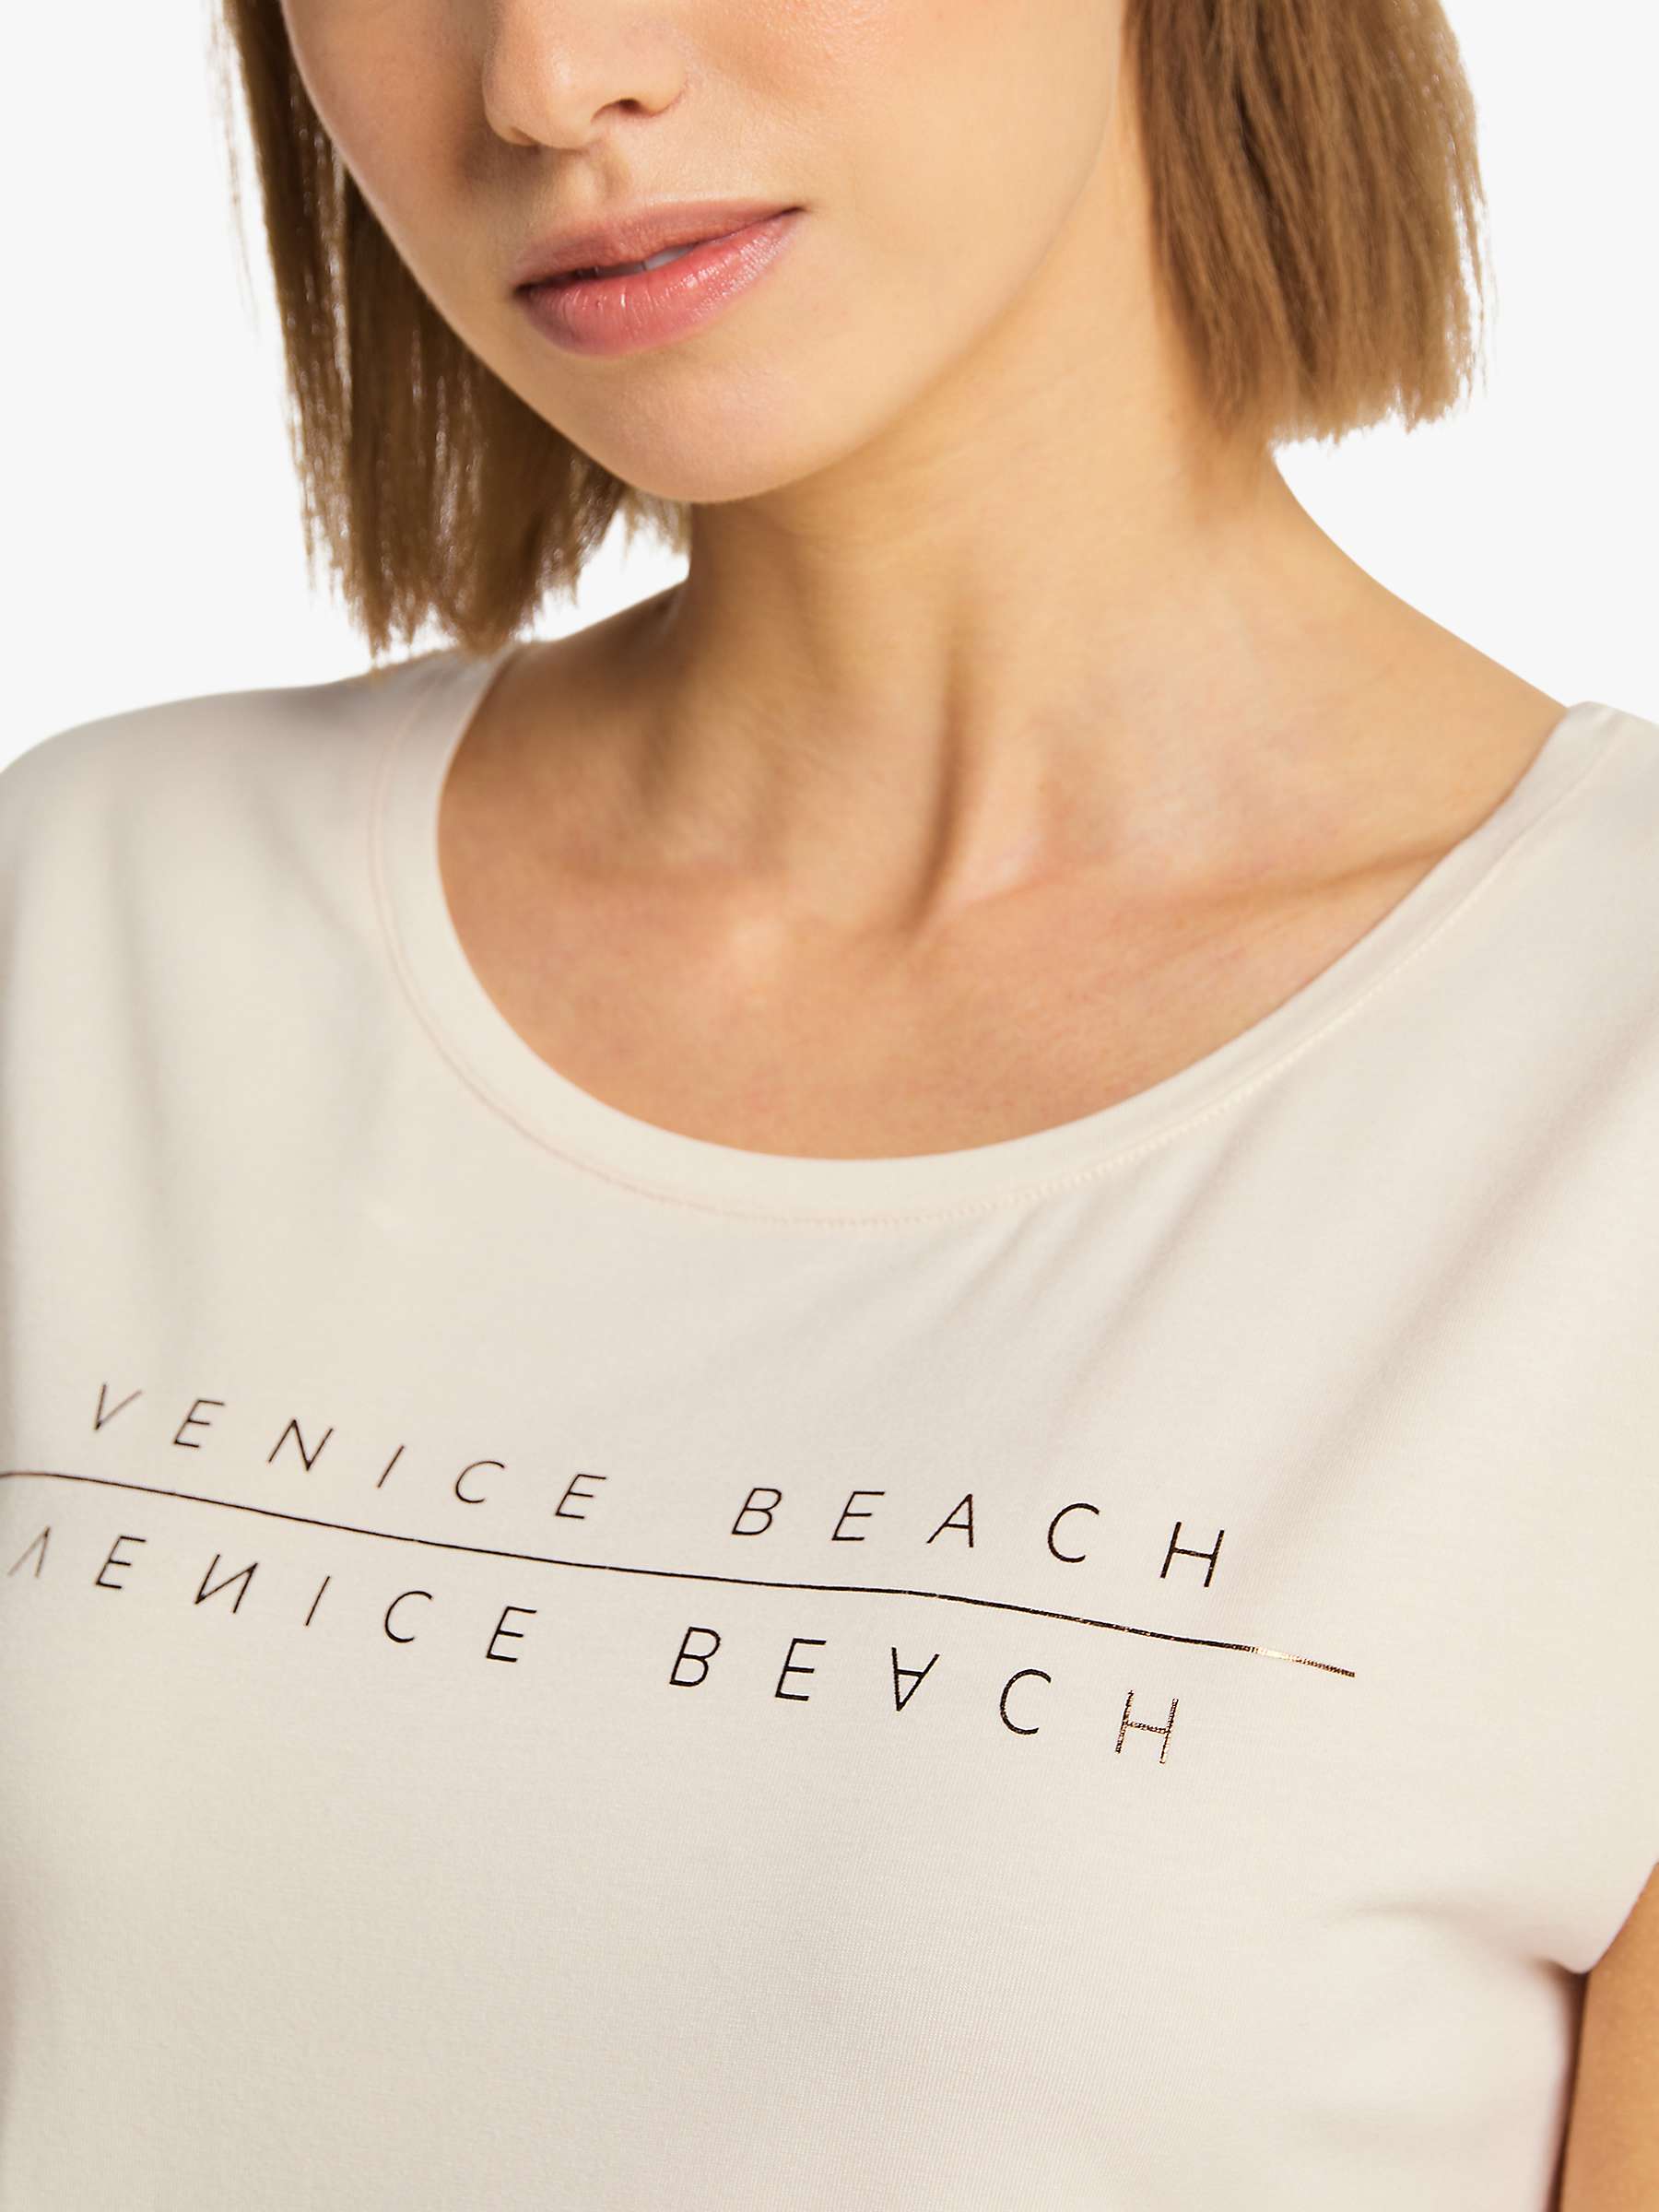 Buy Venice Beach Wonder T-Shirt Online at johnlewis.com